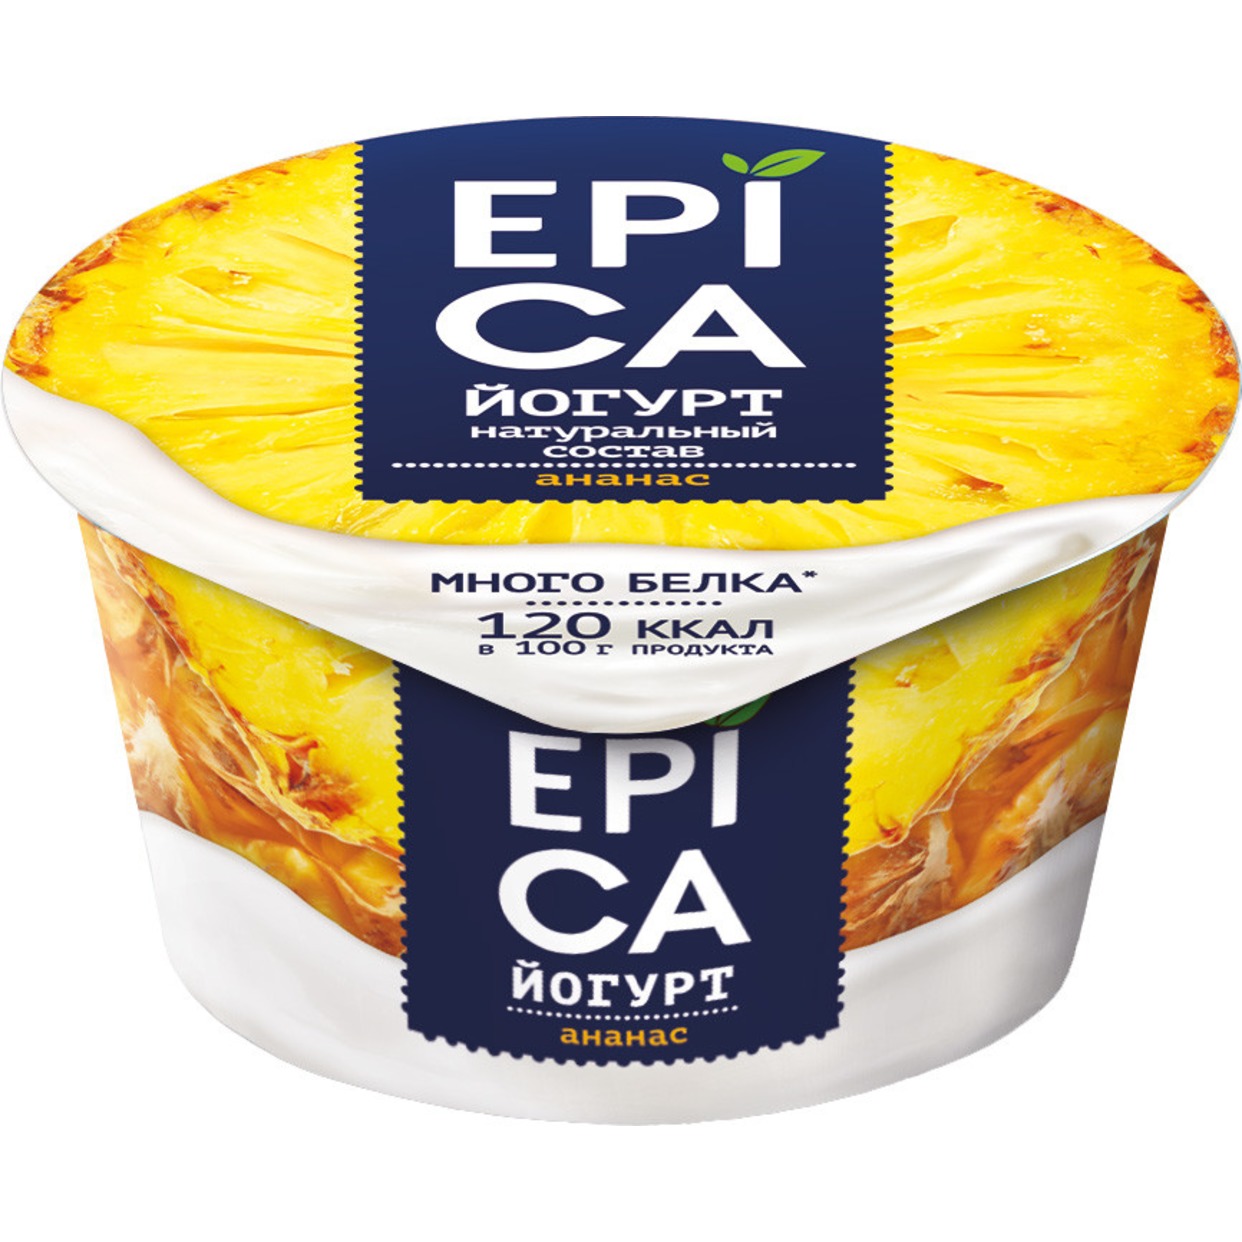 EPICA Йогурт с ананасом 4,8% 130г